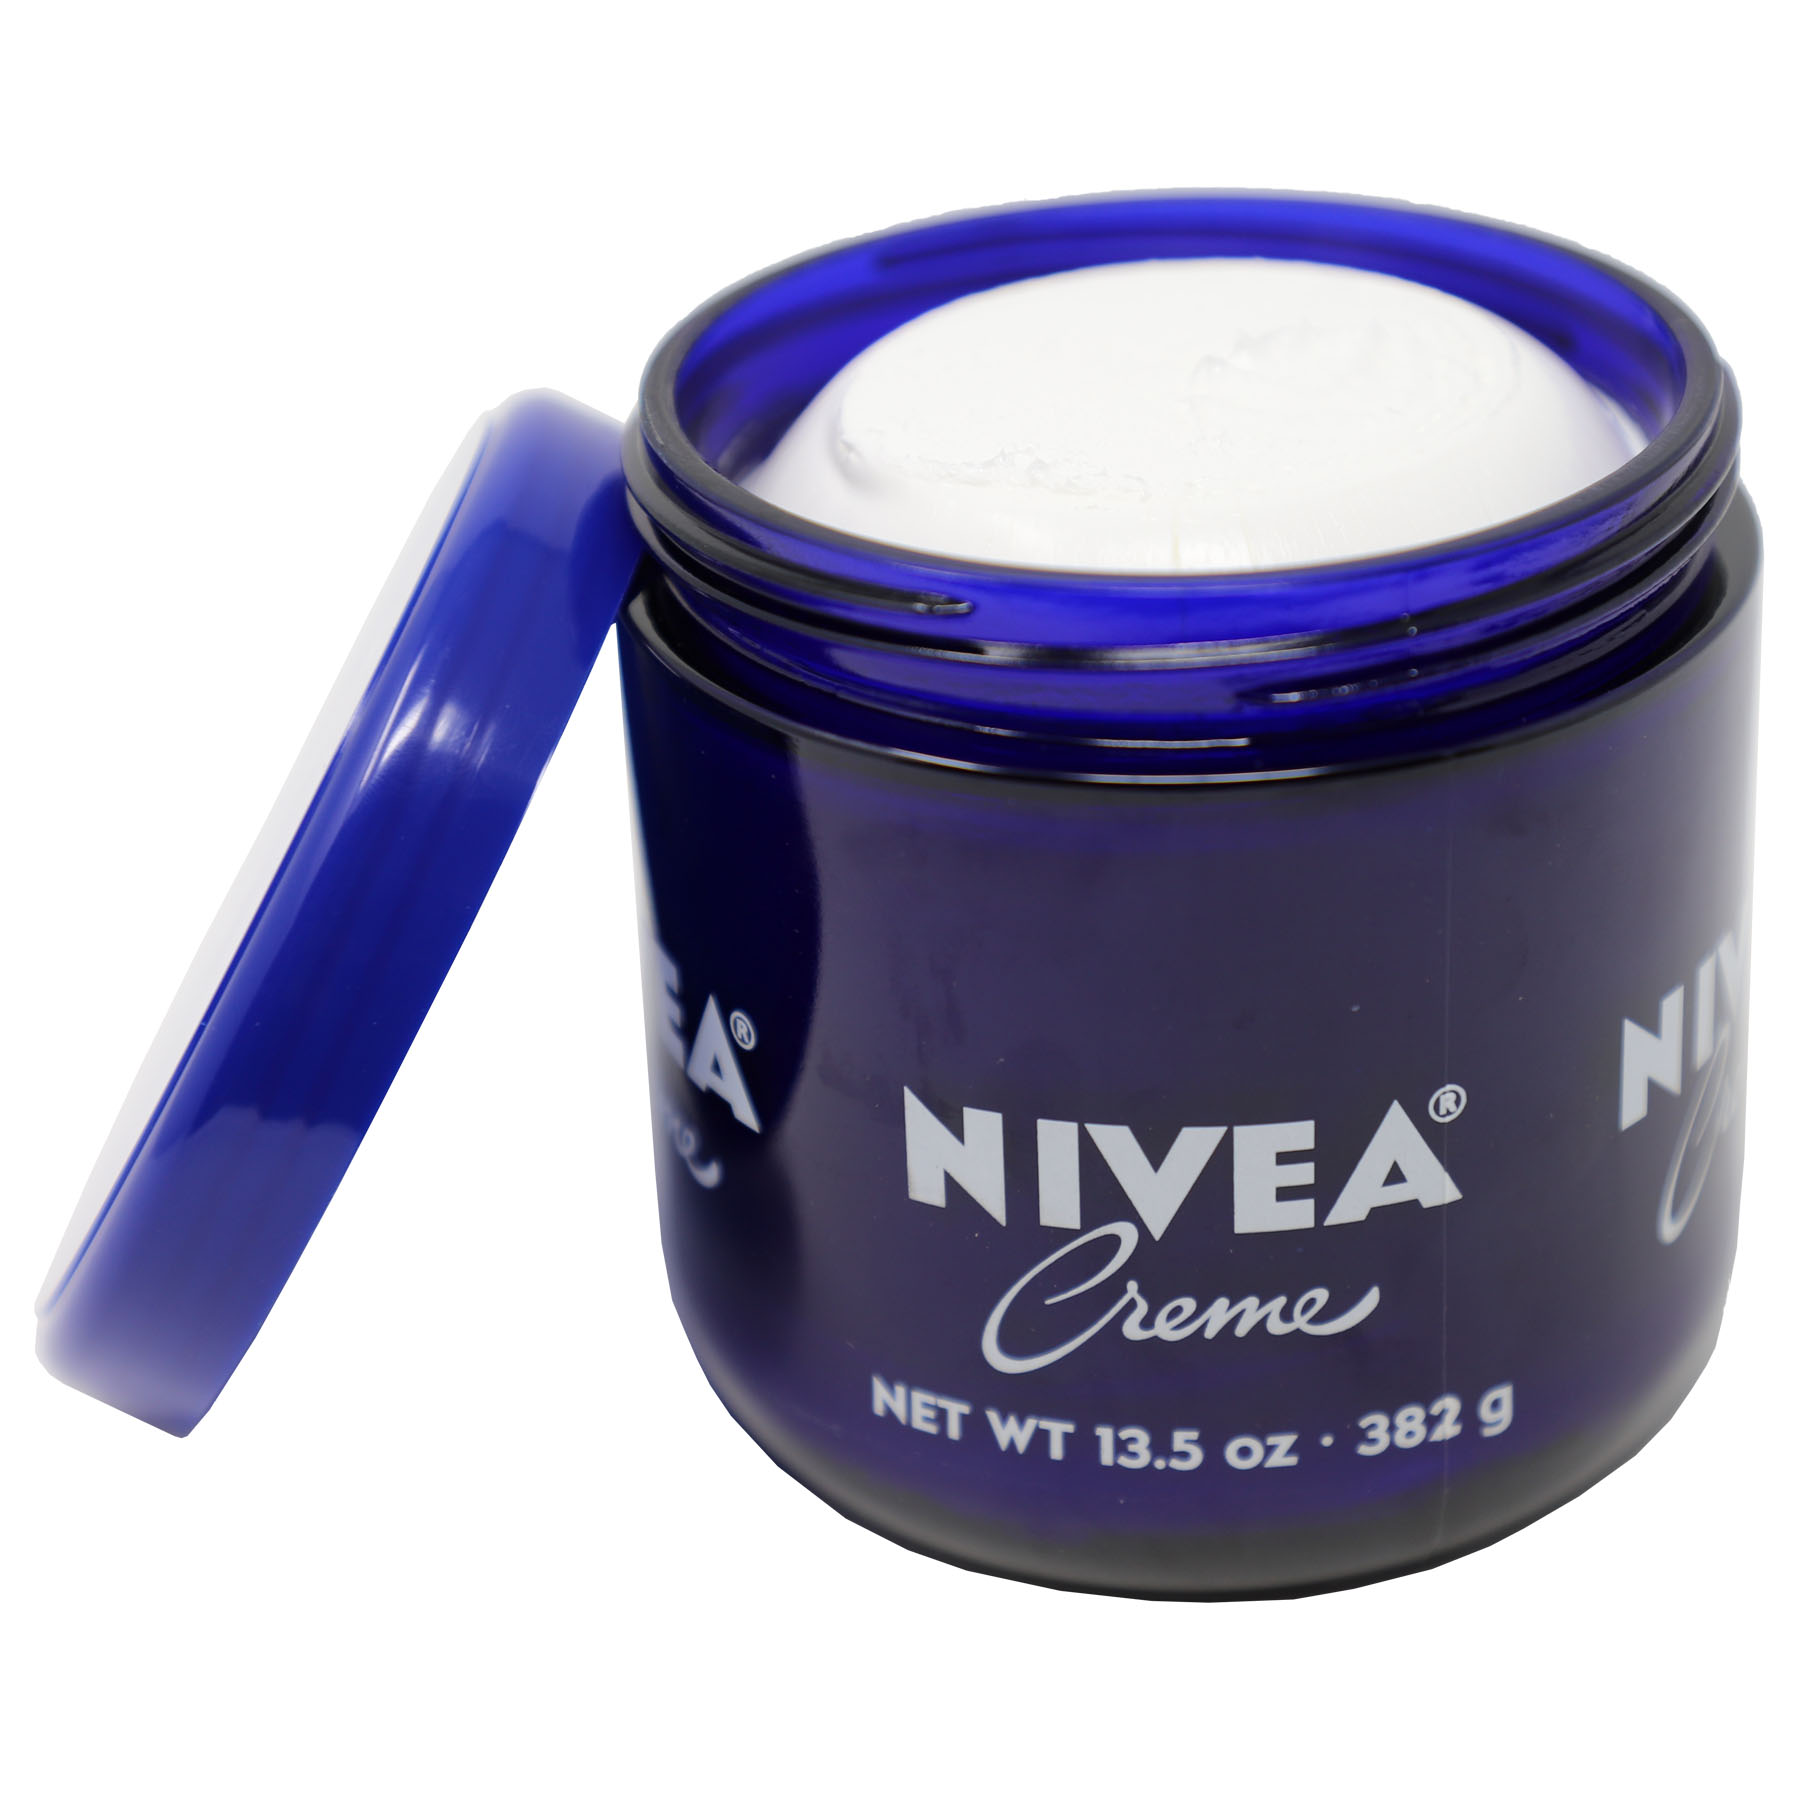 Nivea Cream Glass Jar, Moisturizer for Body, Face & Hand Care, All Skin Types, 13.5 oz - image 2 of 5